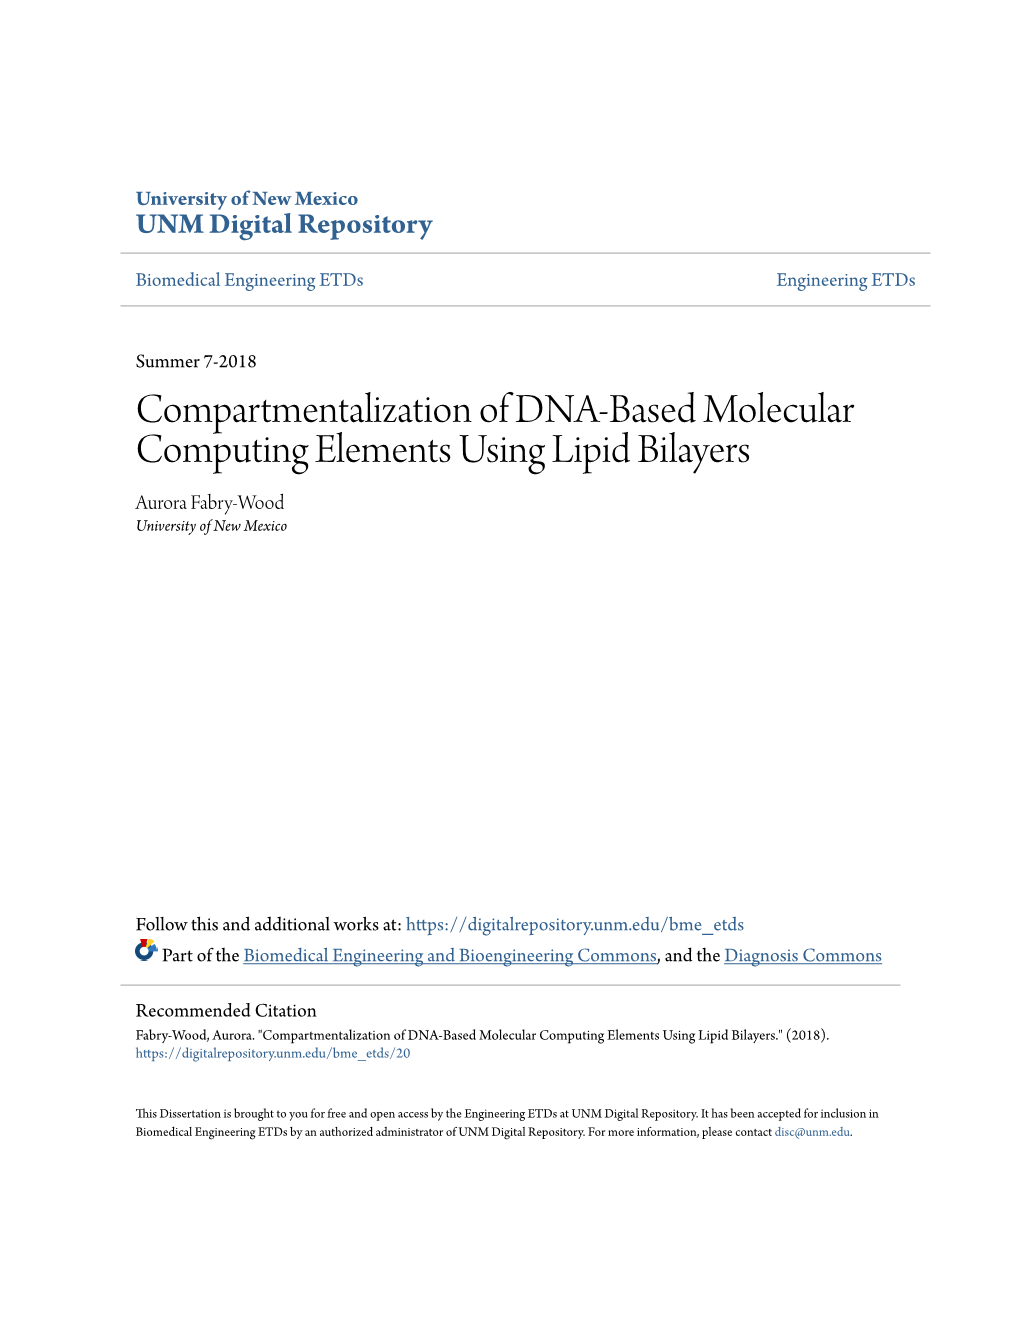 Compartmentalization of DNA-Based Molecular Computing Elements Using Lipid Bilayers Aurora Fabry-Wood University of New Mexico